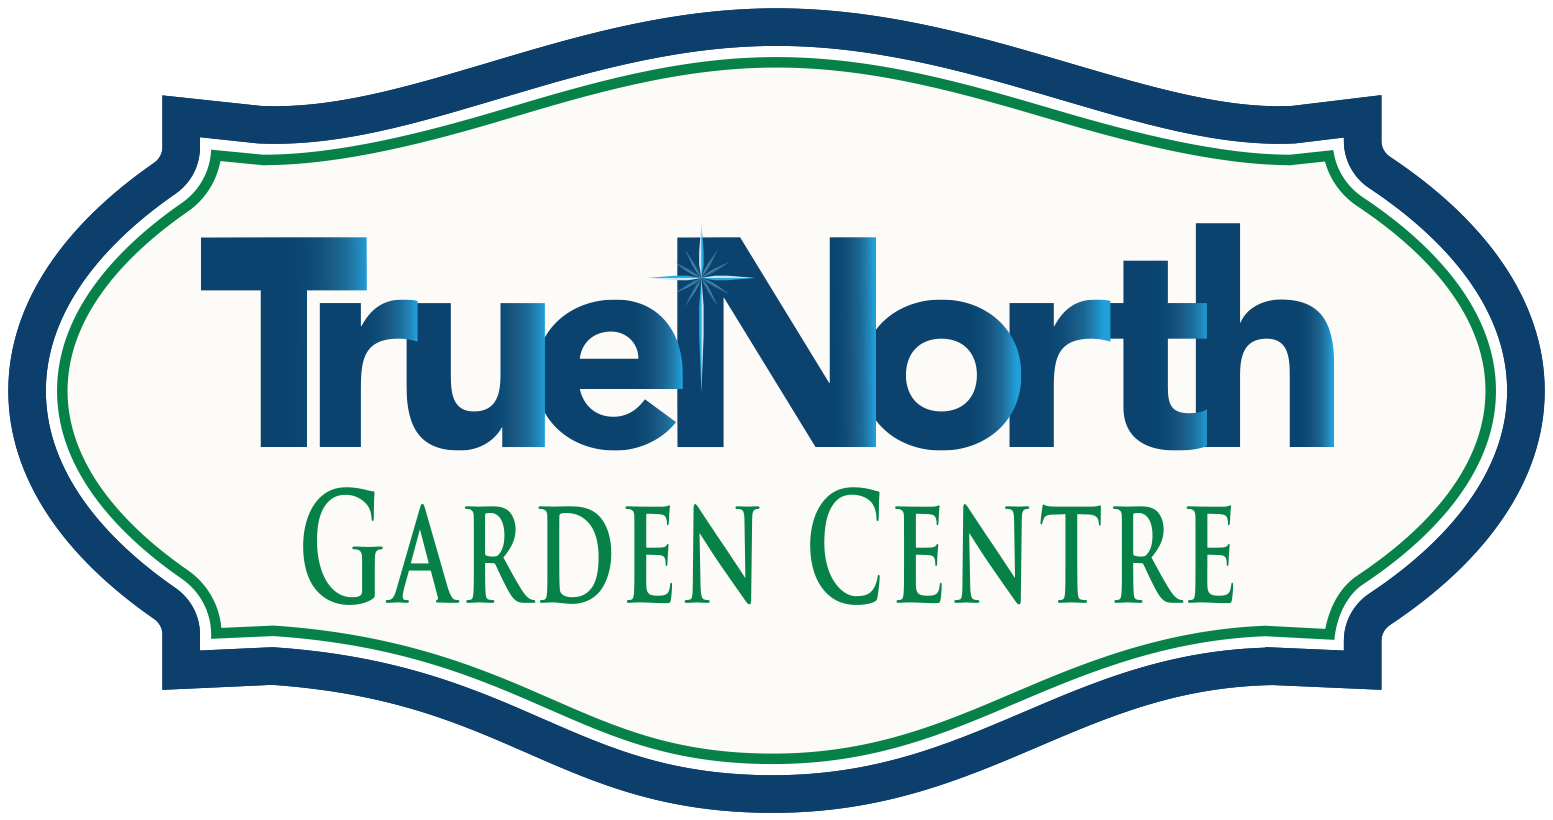 TrueNorth Garden Centre